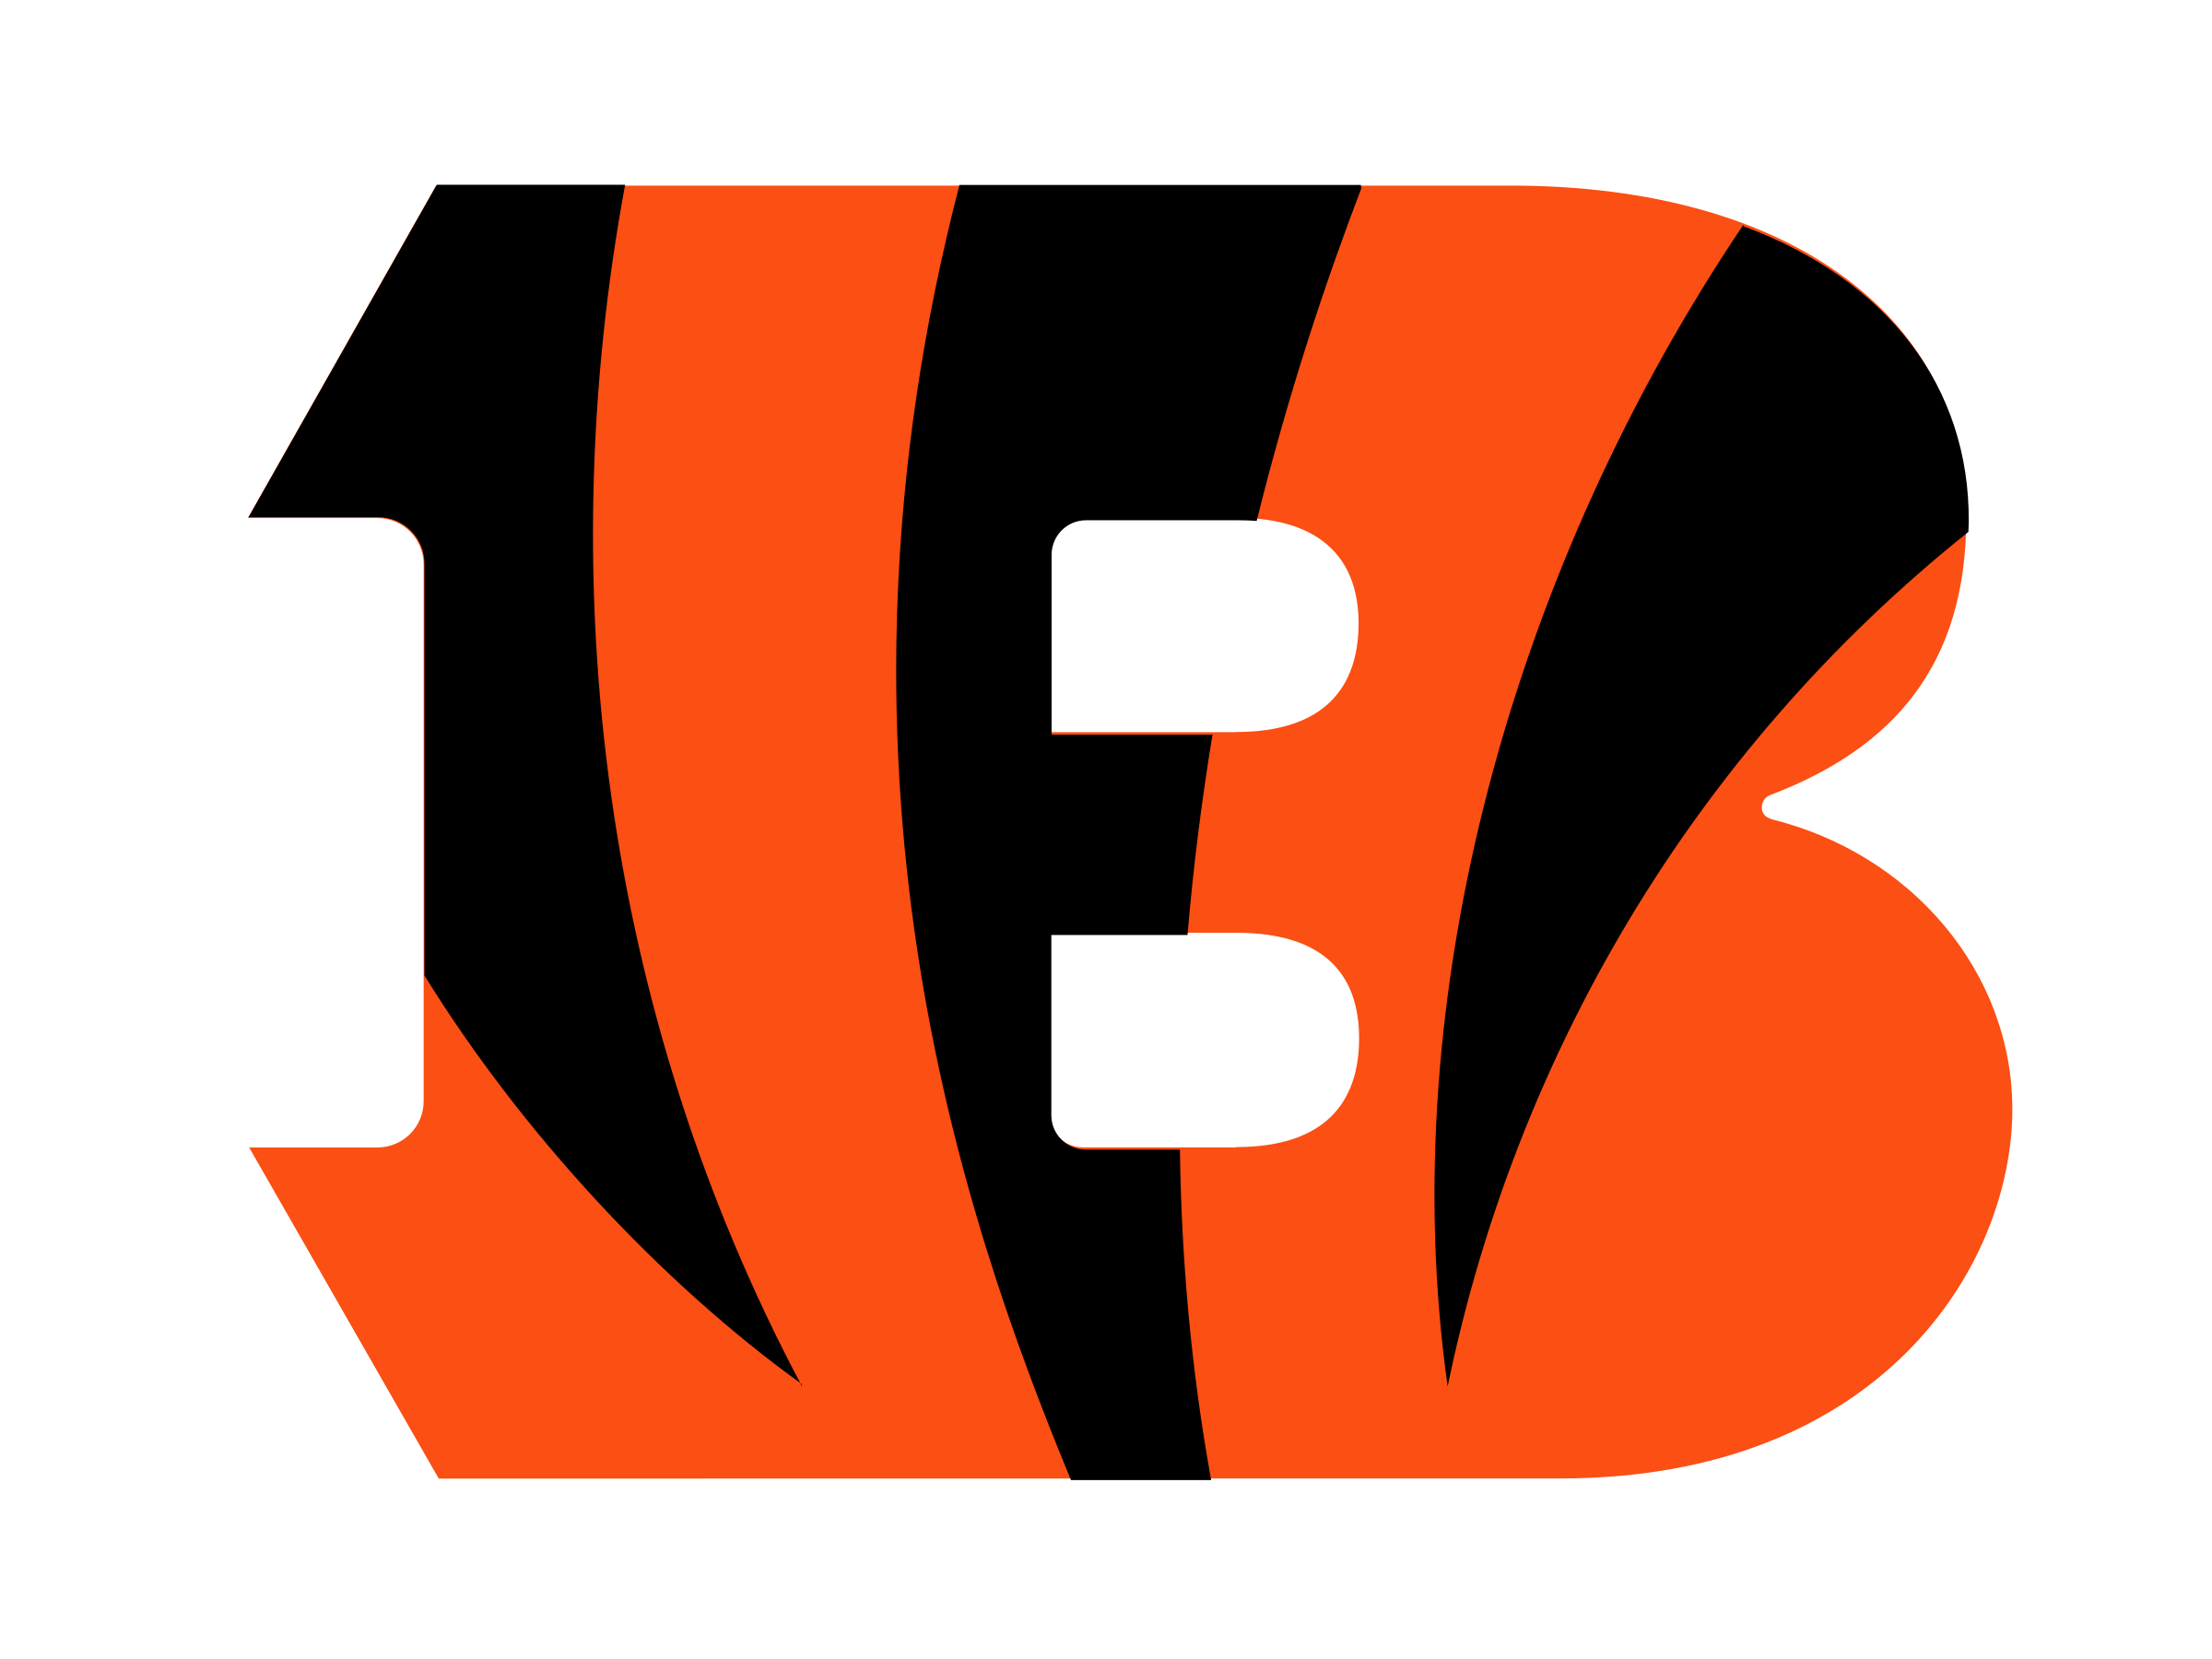 Cincinnati Bengals logosu şeffaf